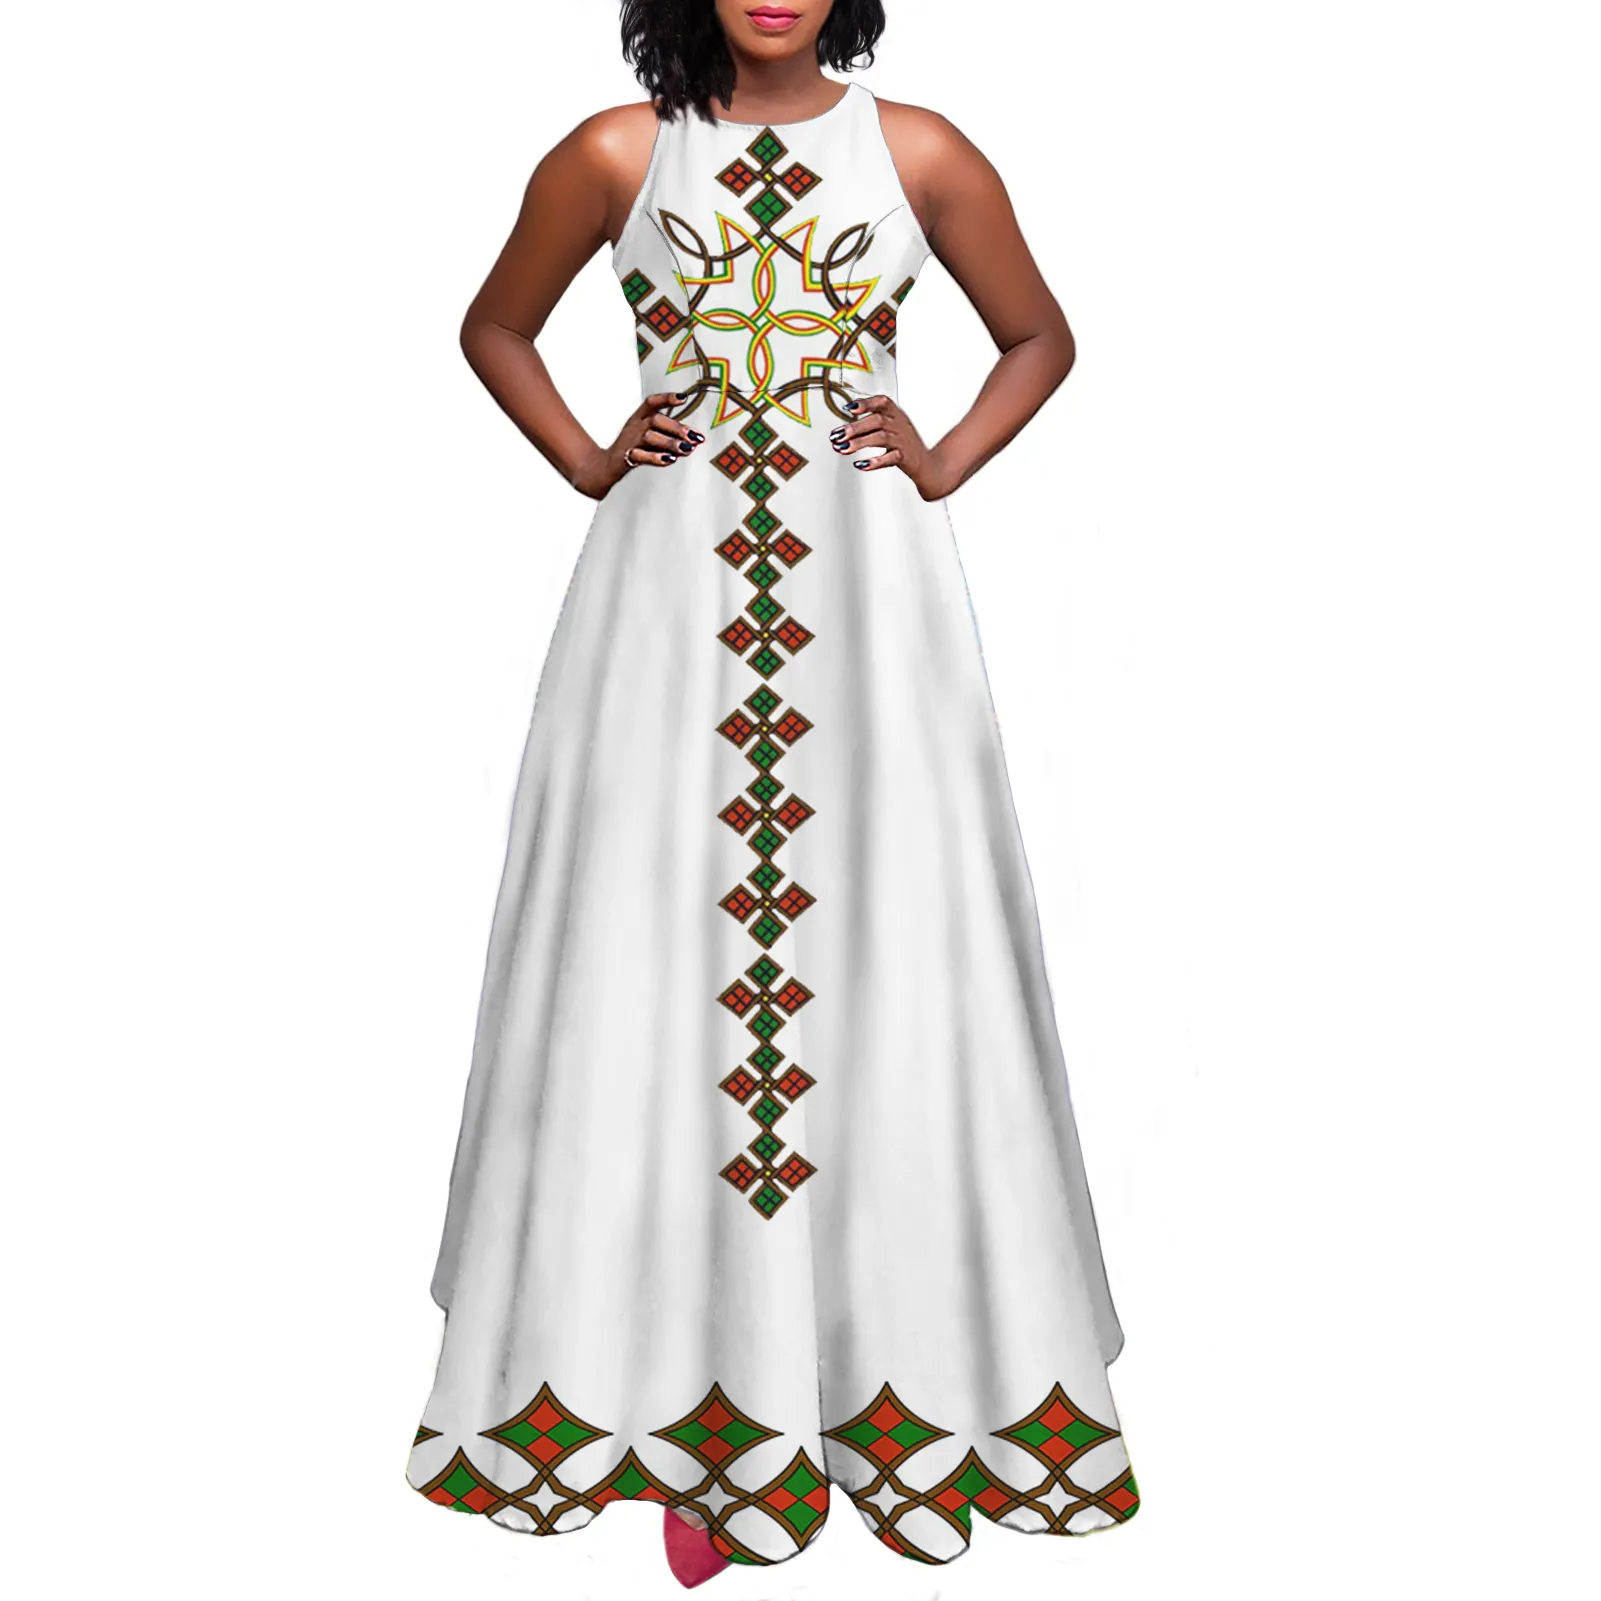 Puma Fijian gaun wanita desain Etiopia gaun panjang bunga kustom sesuai pesanan gaun Afrika kasual untuk wanita